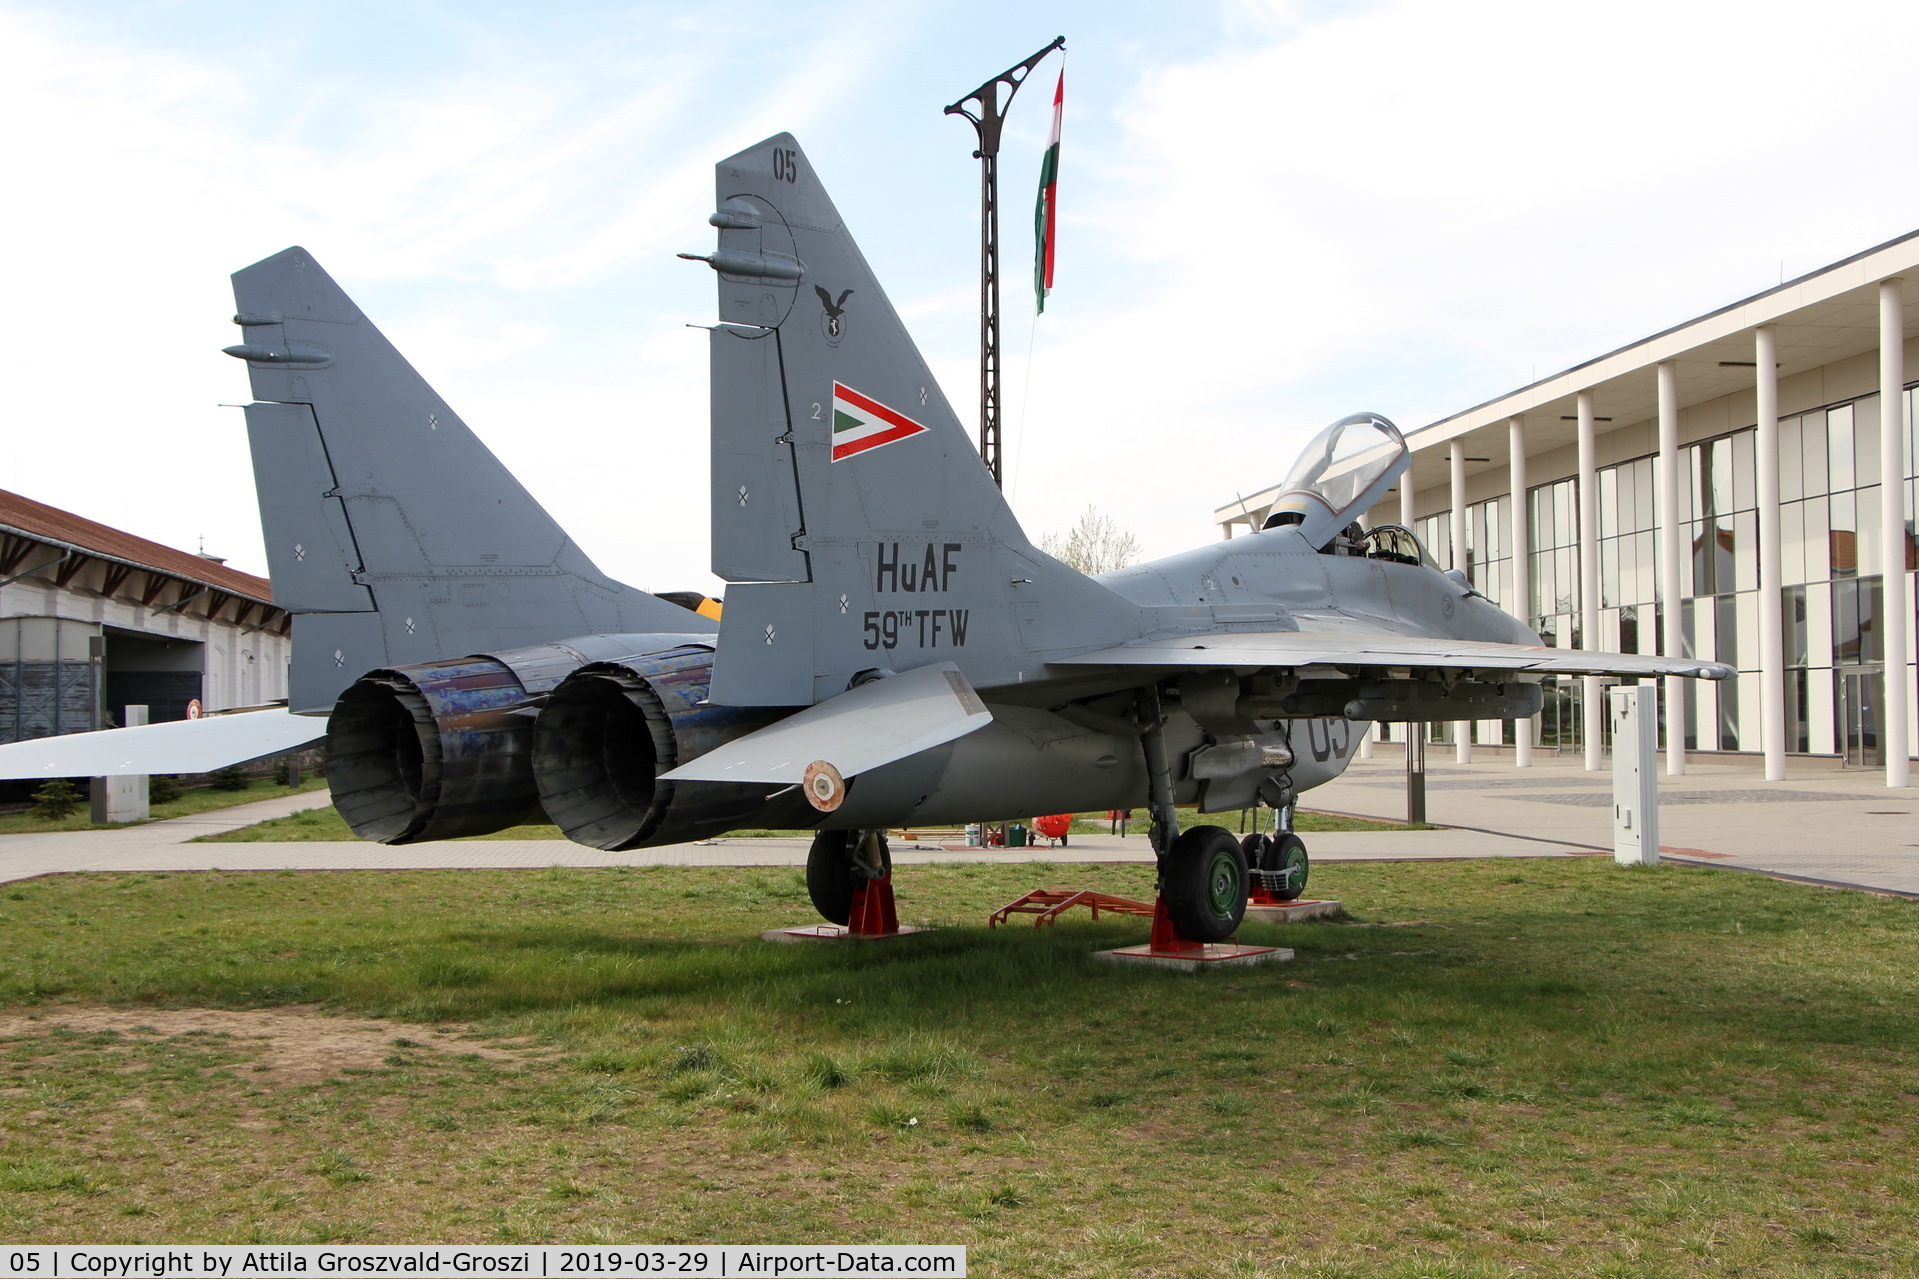 05, Mikoyan-Gurevich MiG-29B C/N 2960535148/4513, RepTár. Szolnok aviation history museum, Hungary